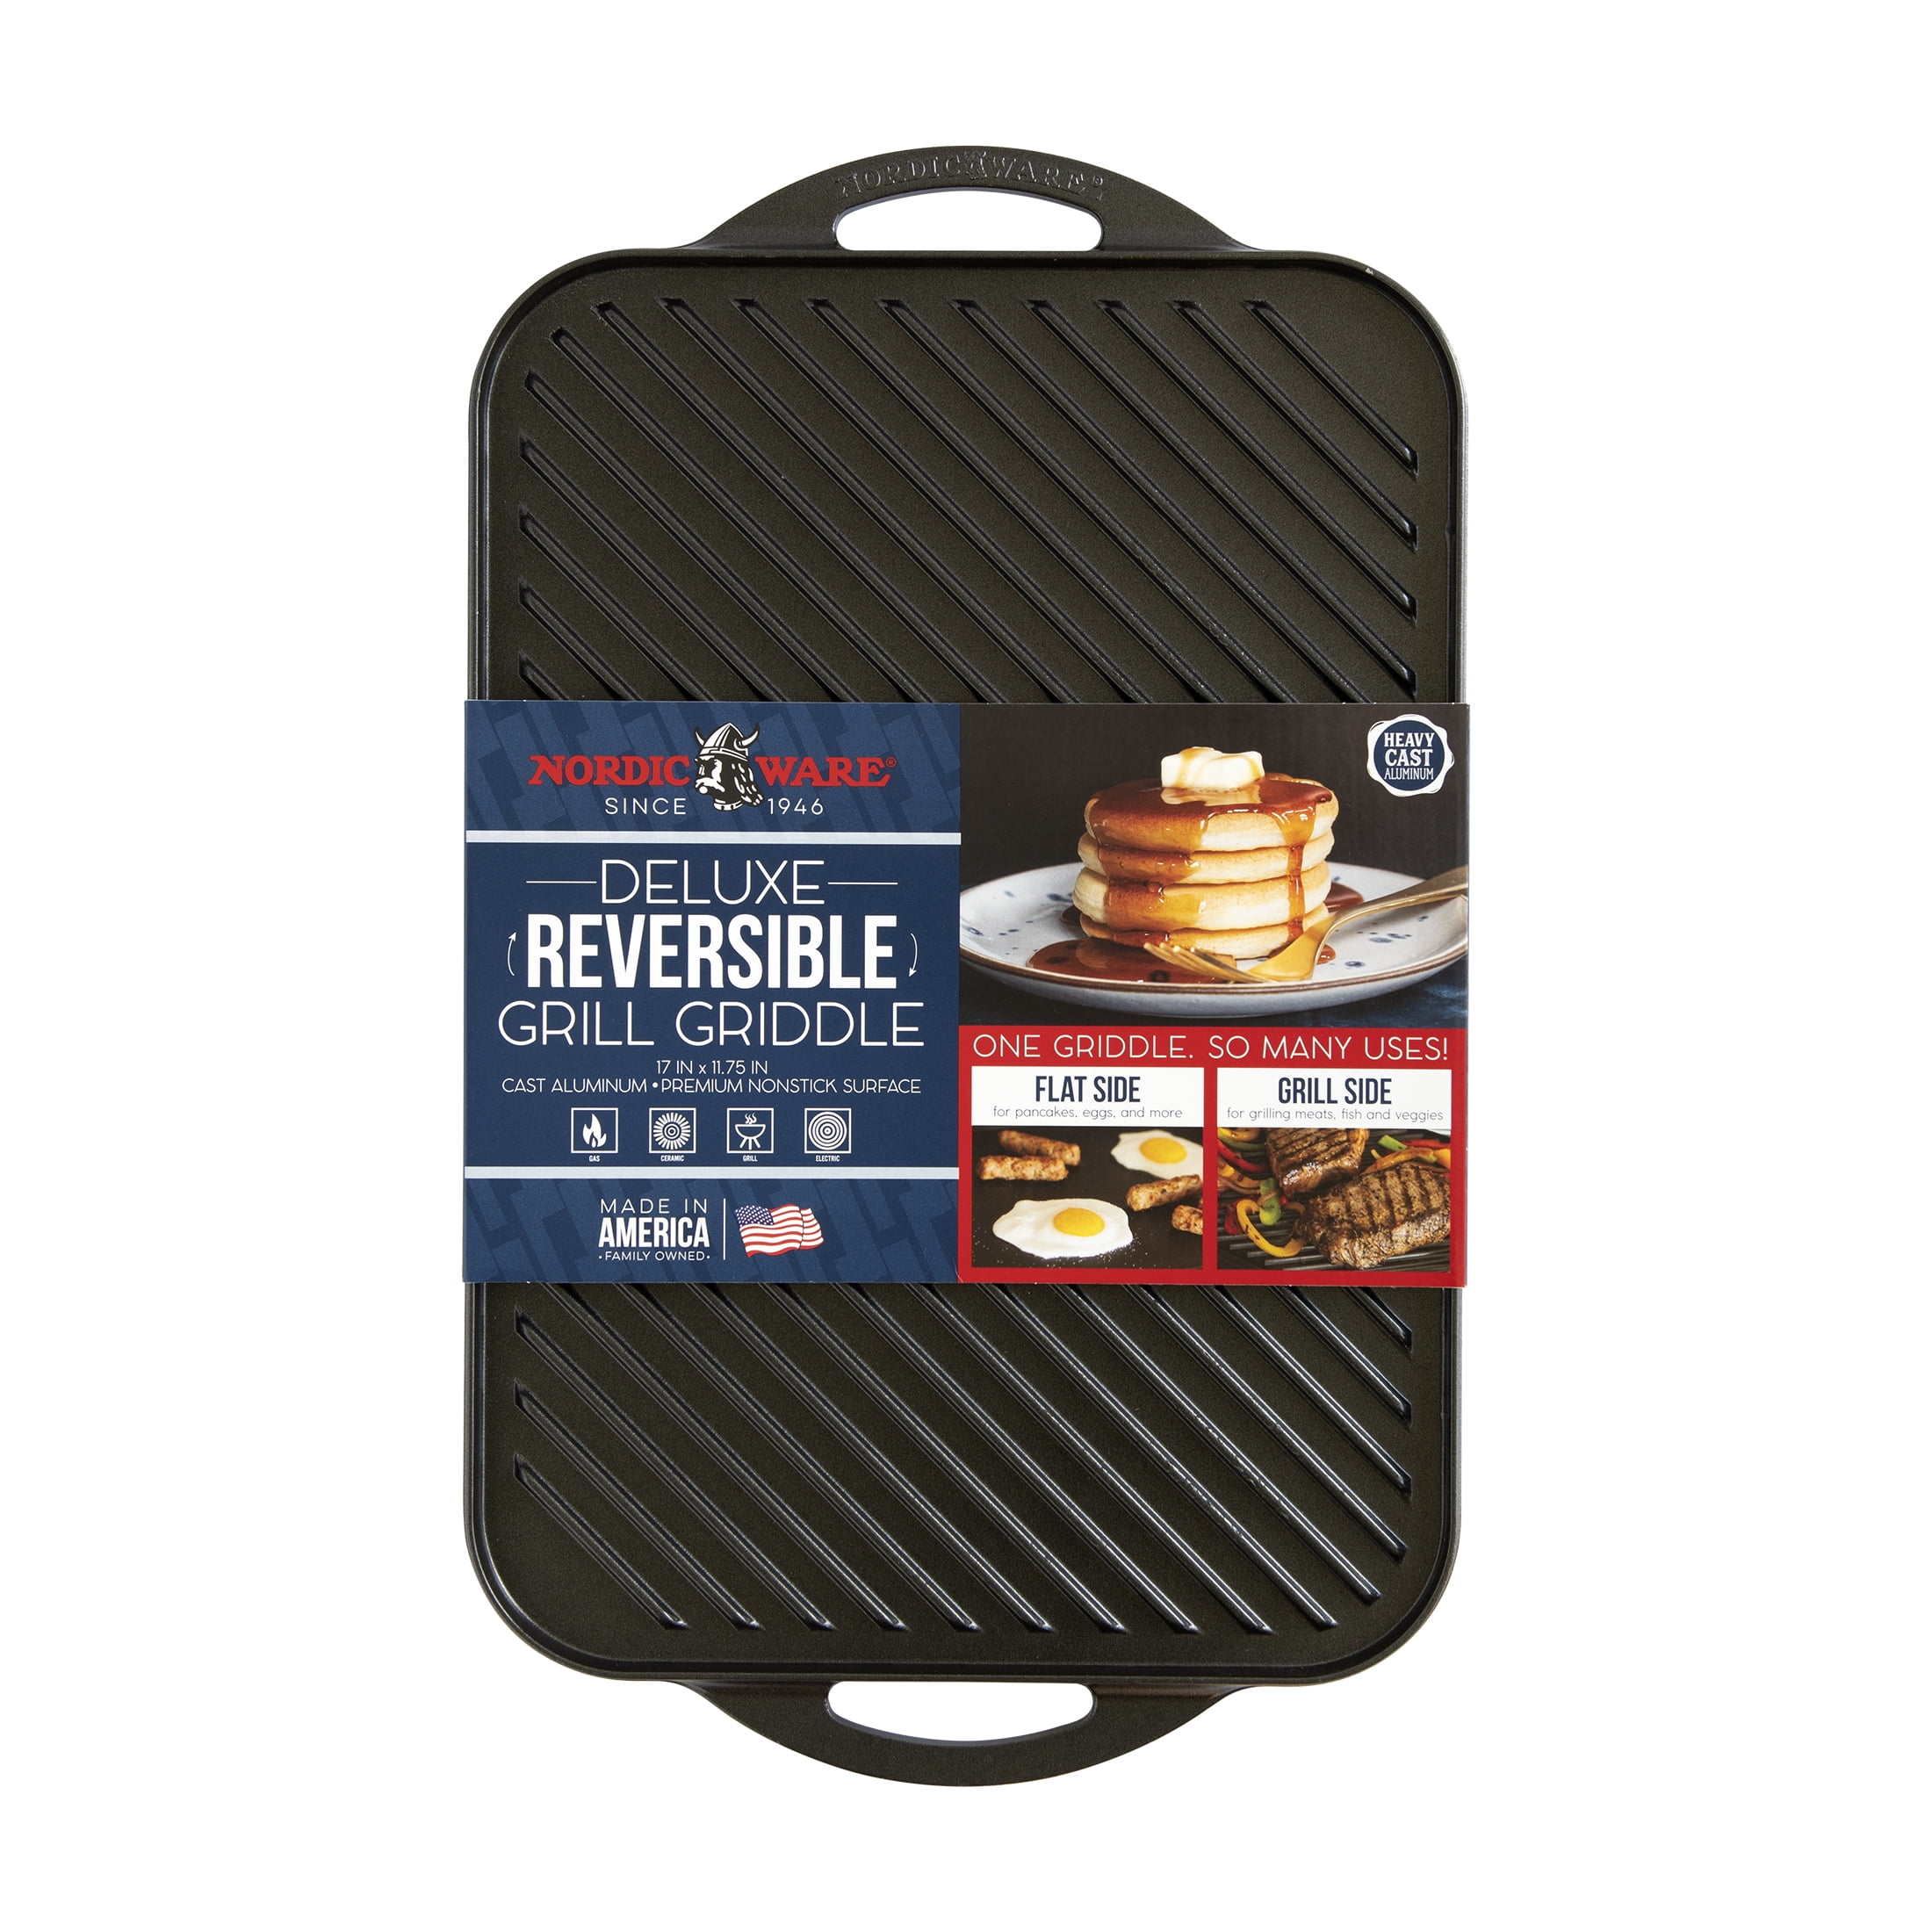 Two Burner Reversible Griddle, Cast Aluminum Cookware